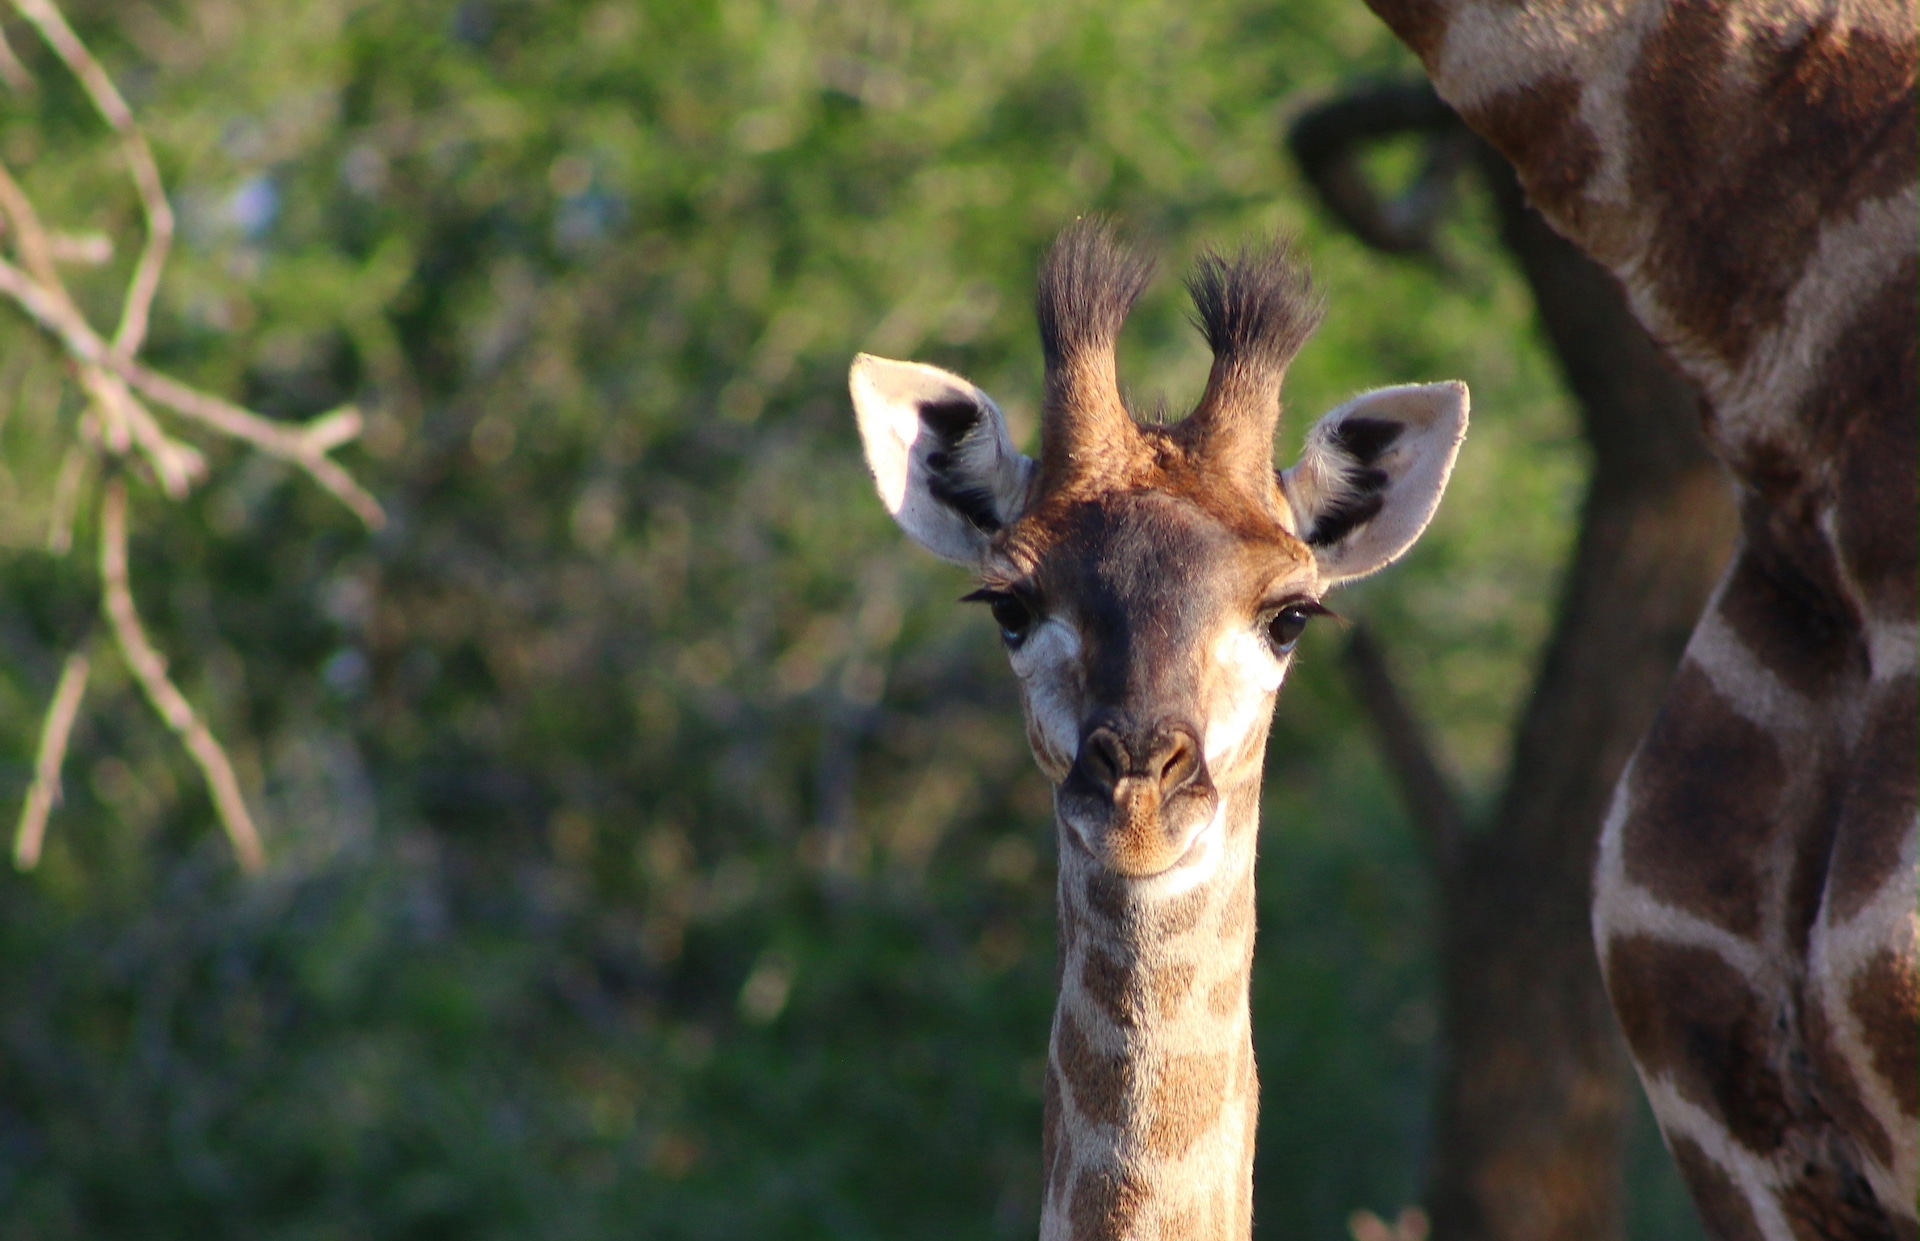 Baby giraffe in Eswatini looking straight at camera